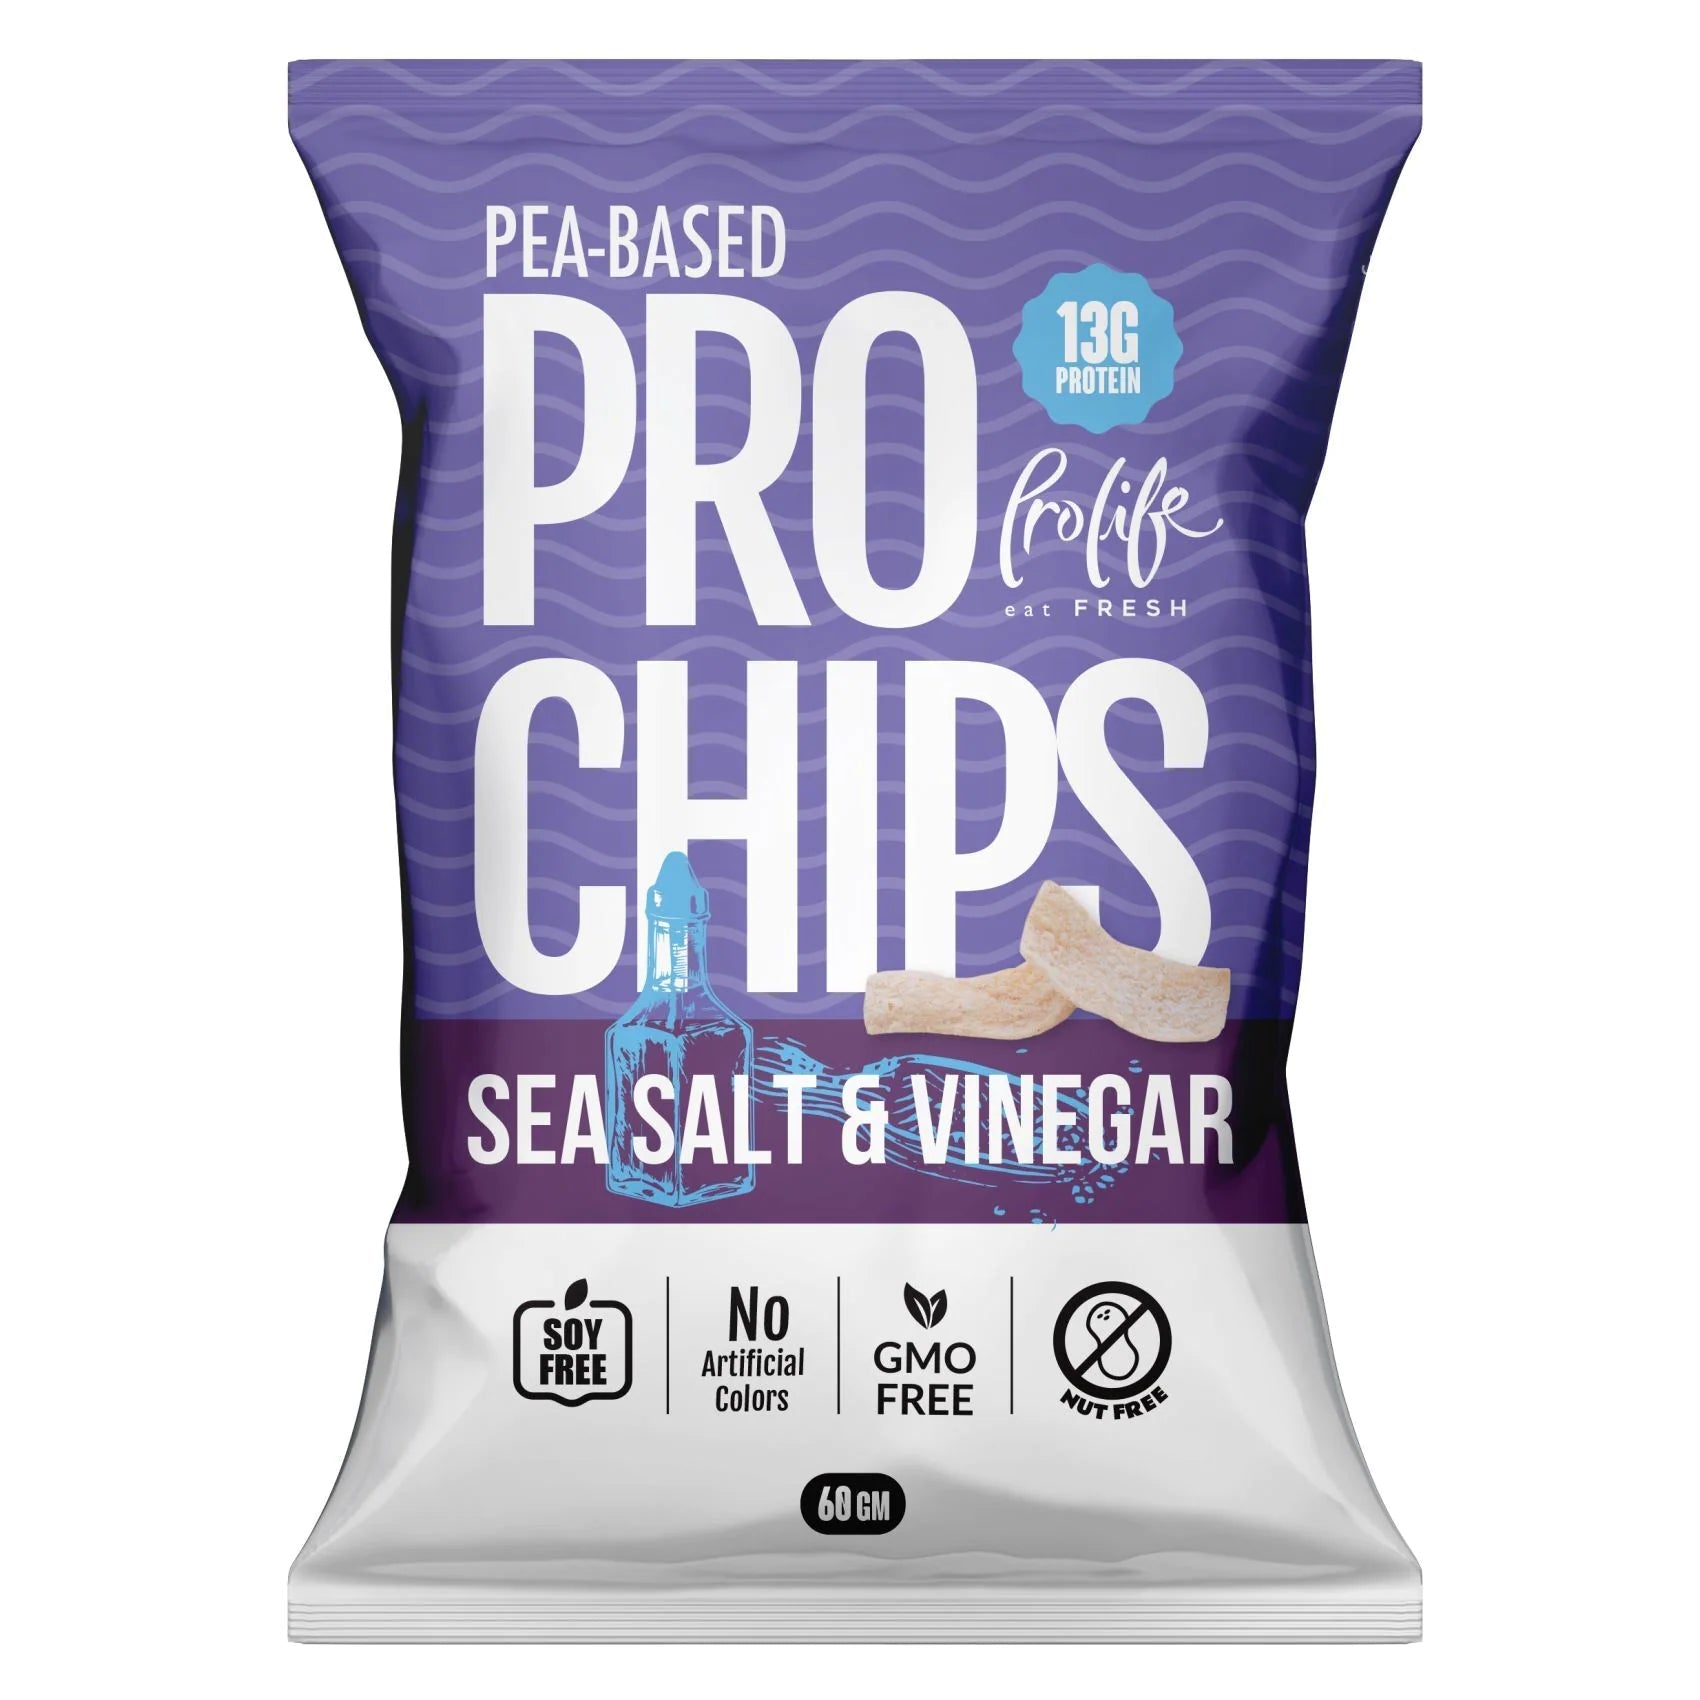 Prolife Pro Chips Pea Based Sea Salt And Vinegar High Protein Non-GMO No Artificial Colors 60g